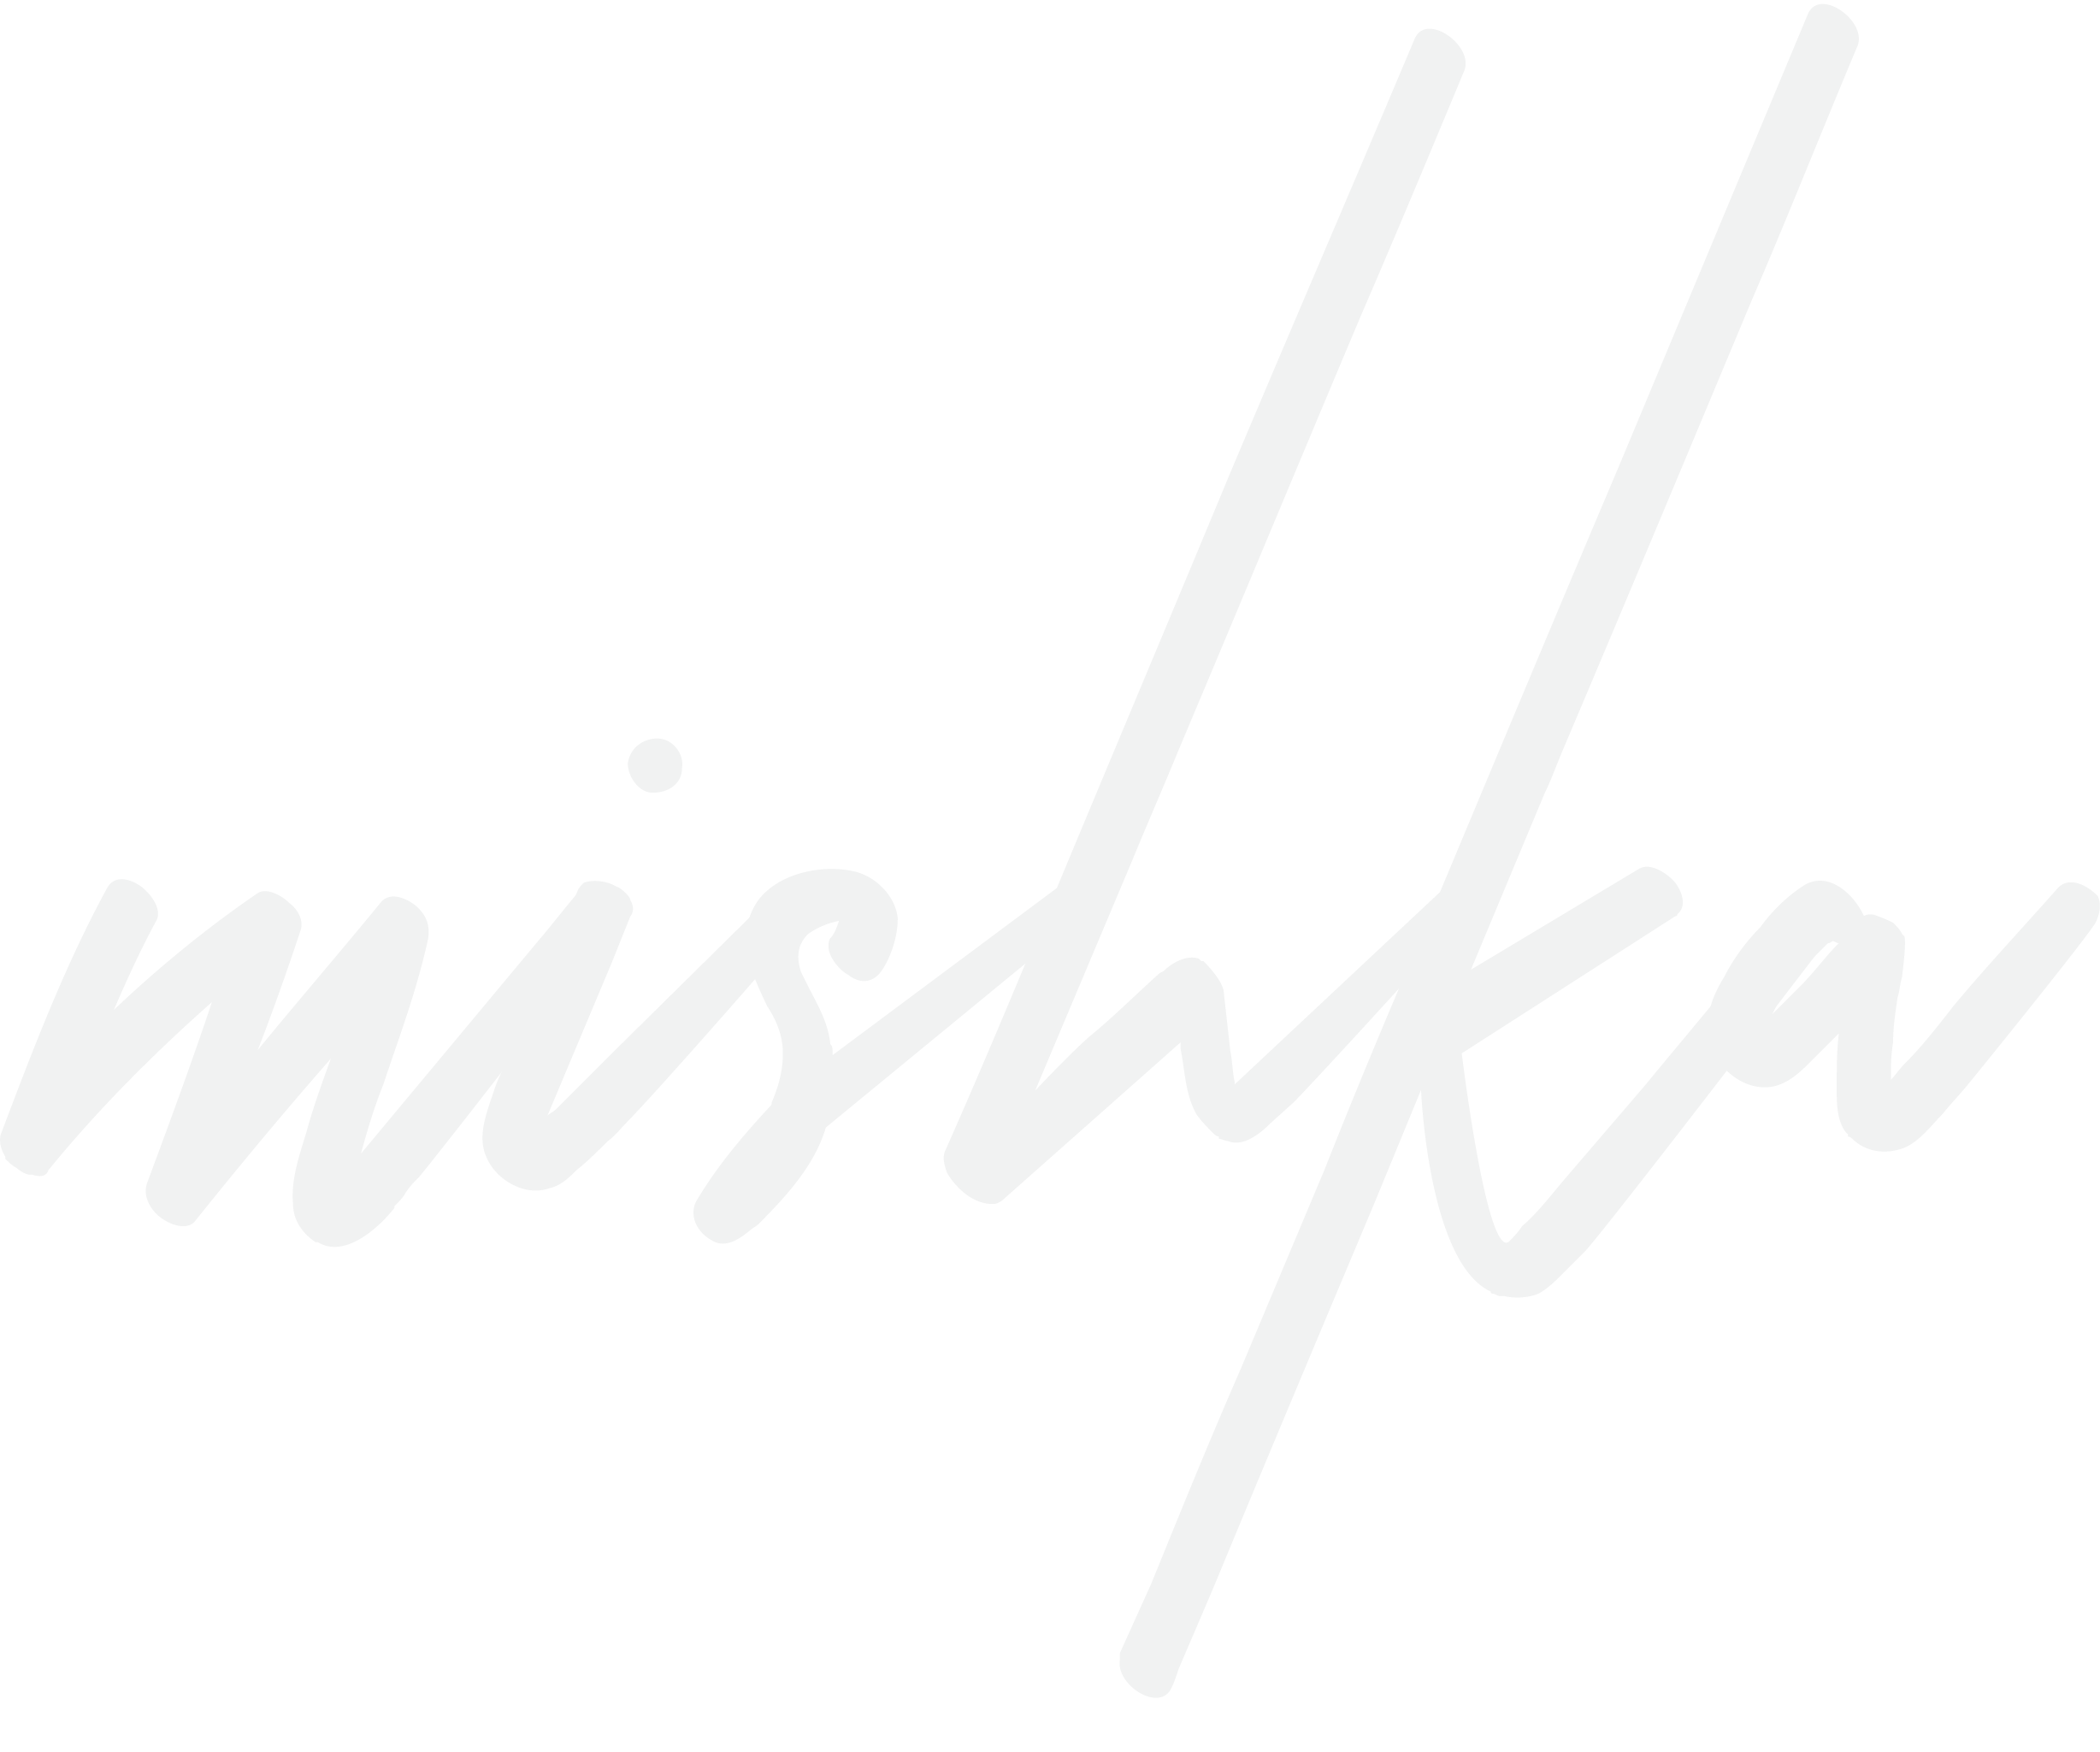 mishka design by May Refky